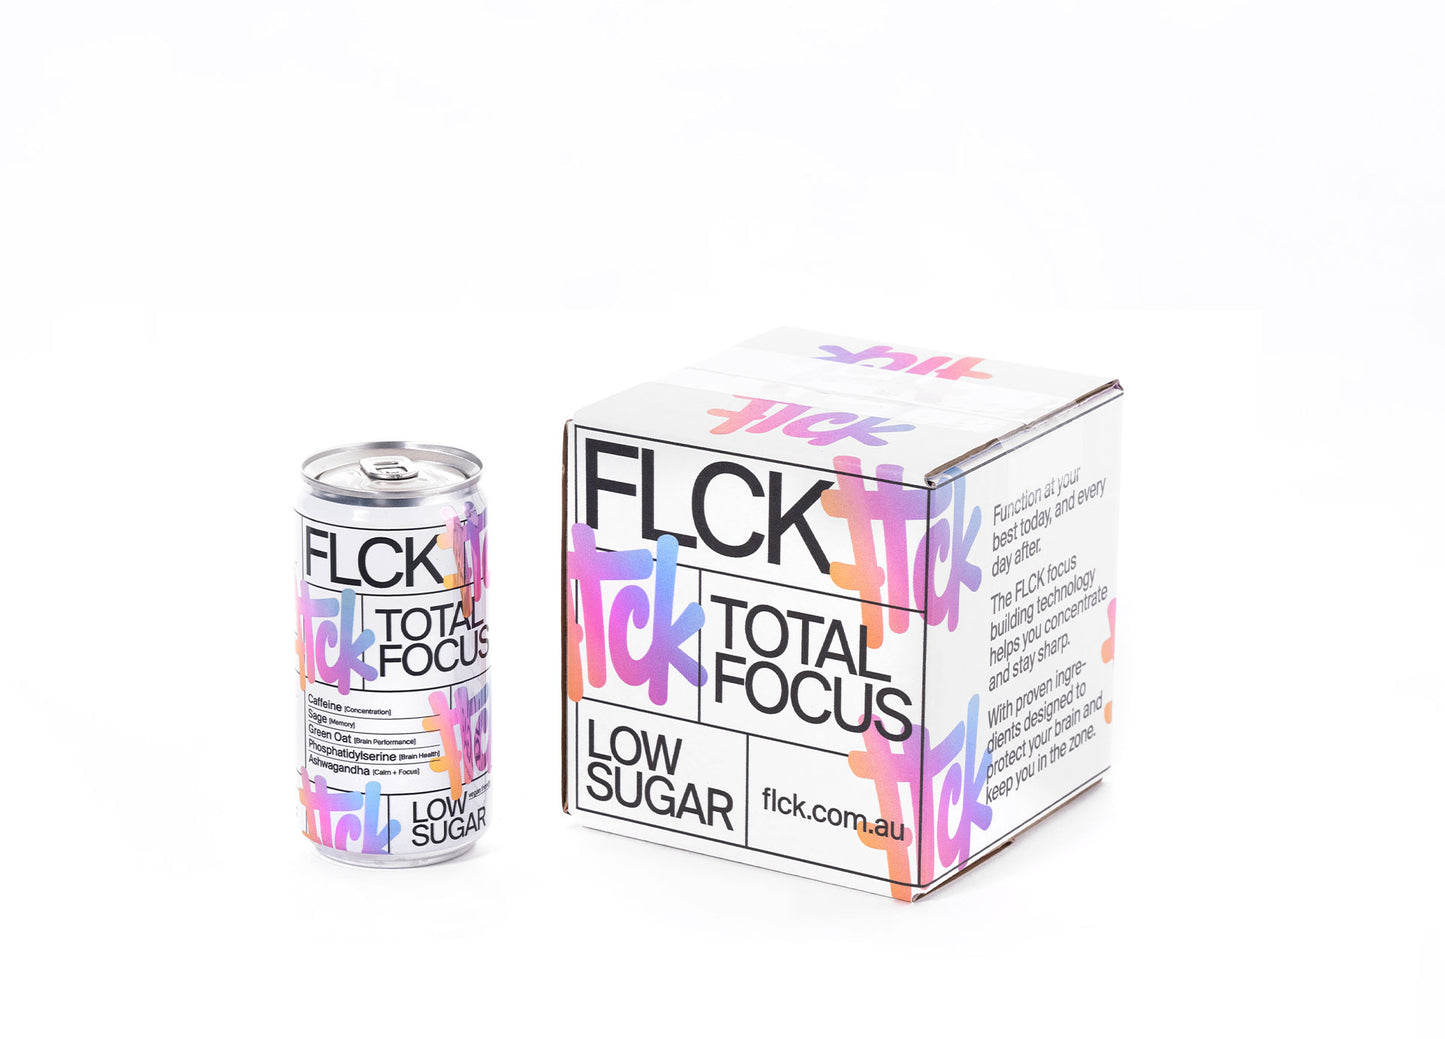 FLCK Low Sugar